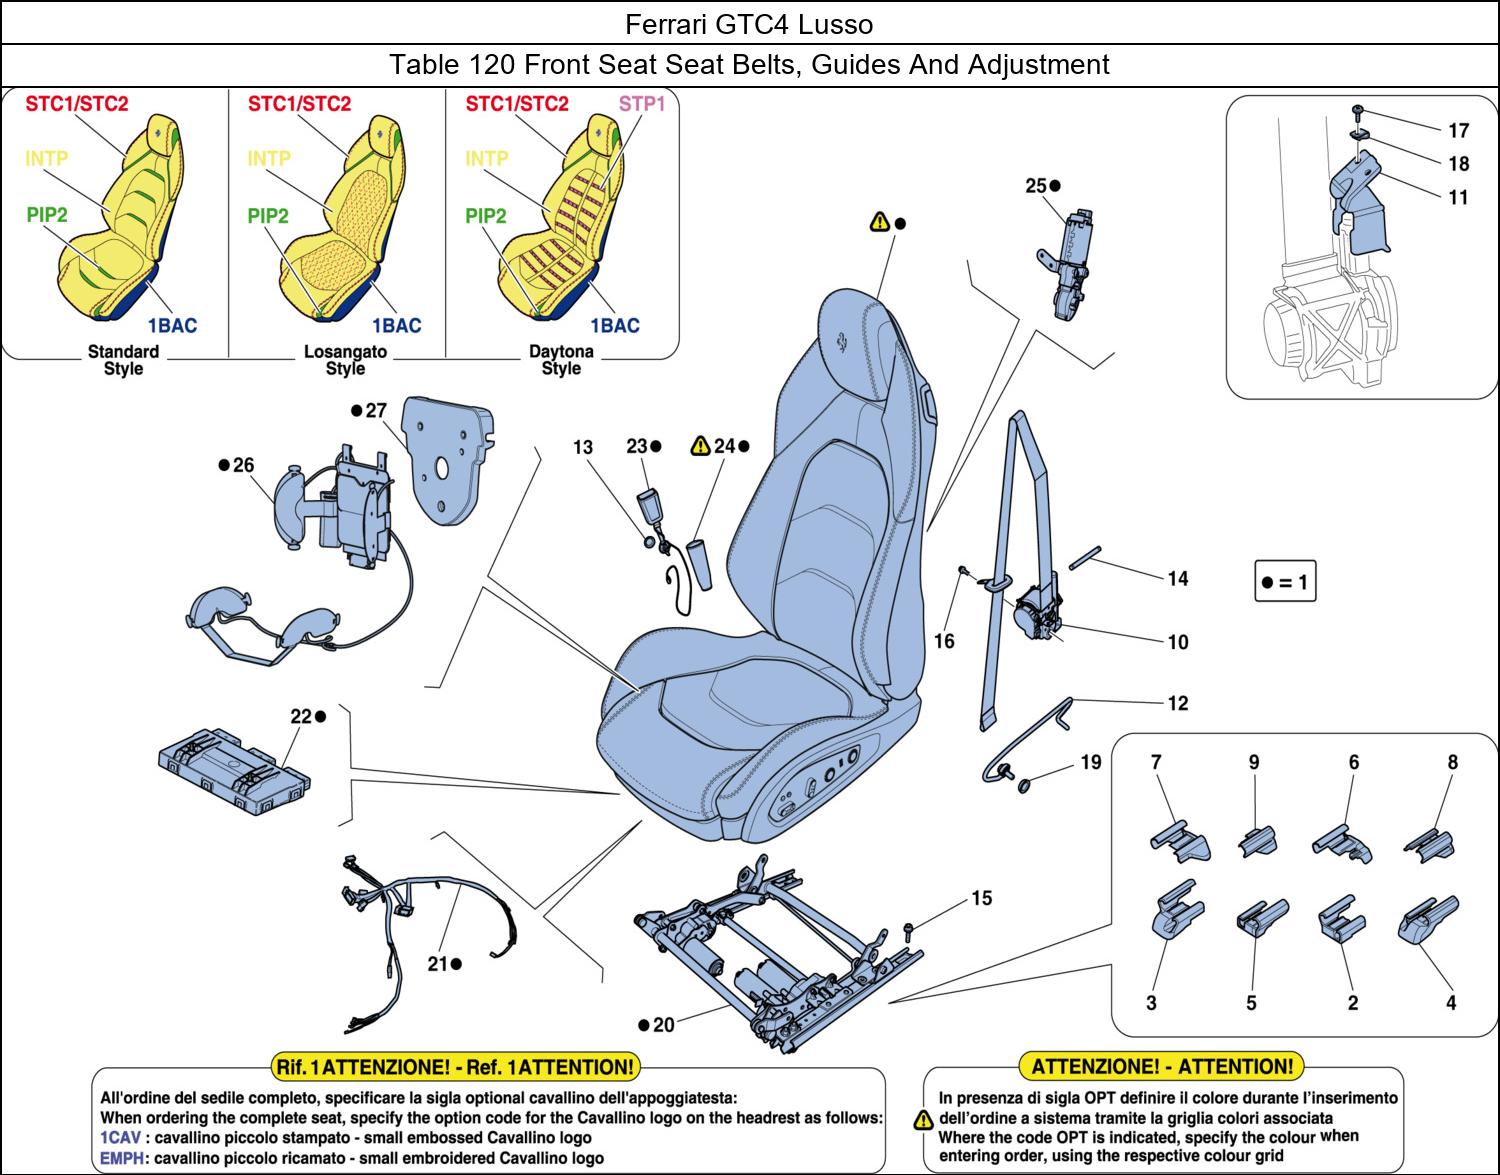 Ferrari Parts Ferrari GTC4 Lusso Table 120 Front Seat Seat Belts, Guides And Adjustment